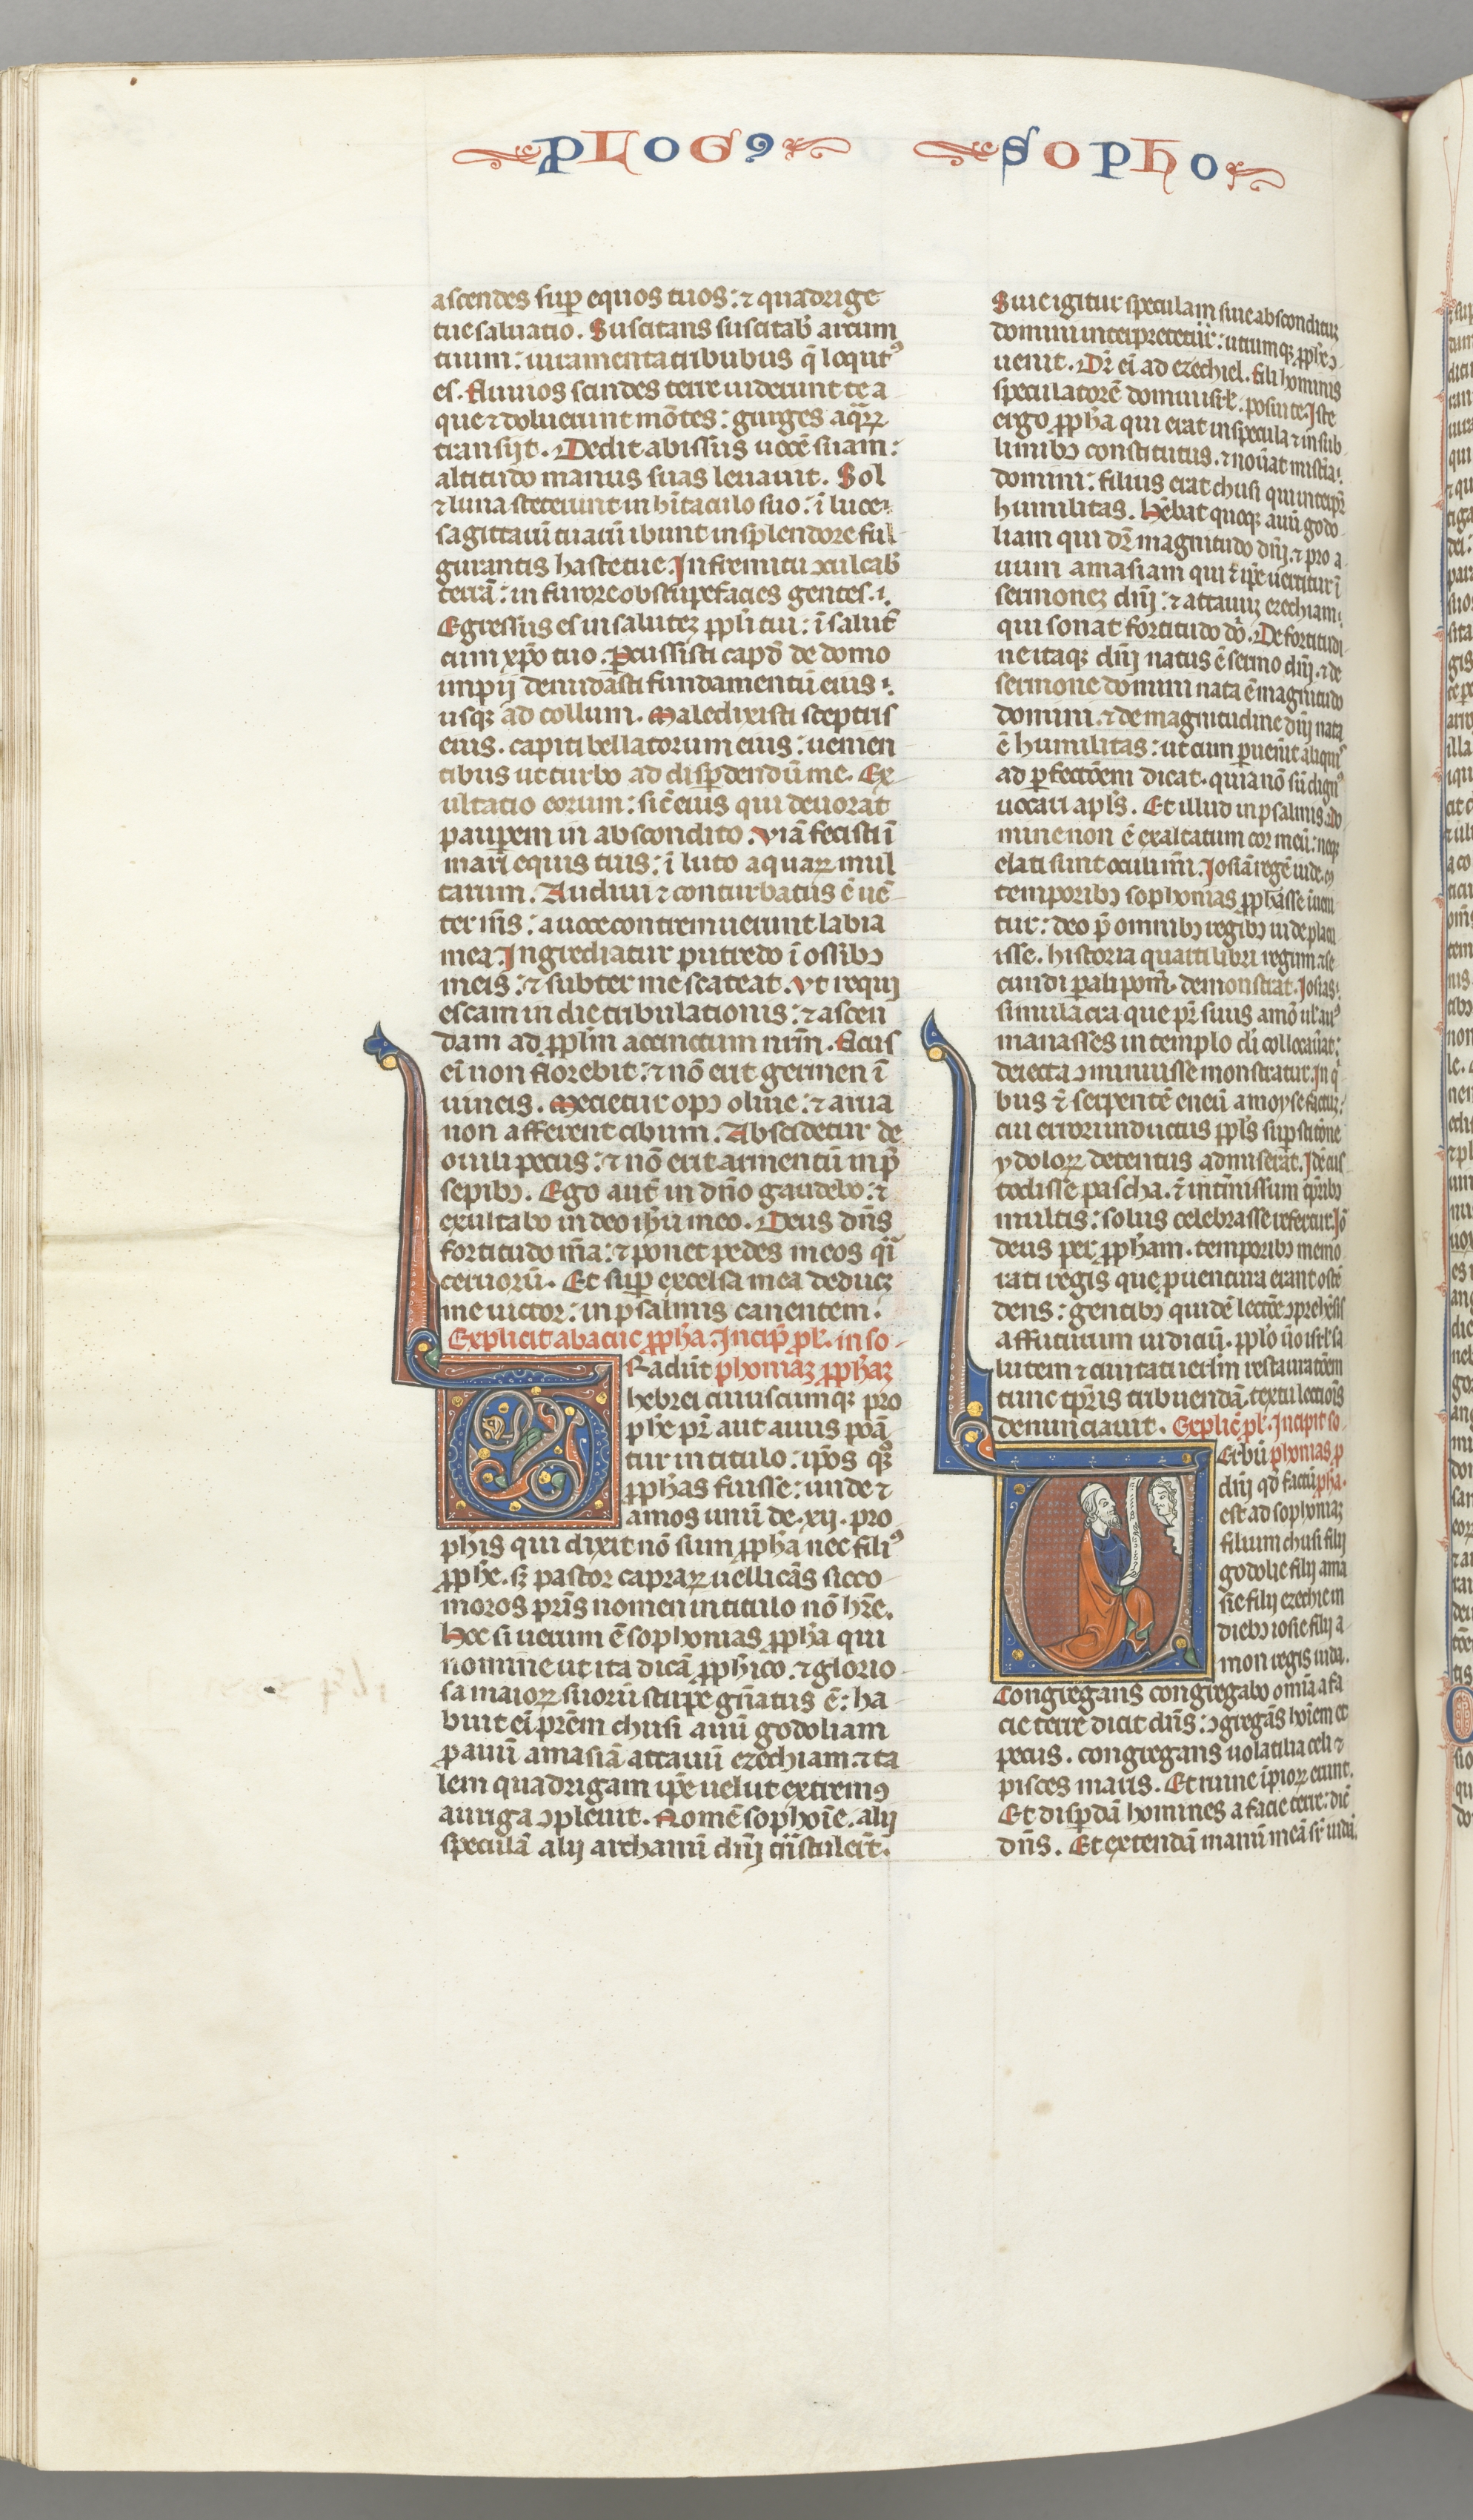 Fol. 362v, Zephaniah, historiated initial V, Zephaniah kneeling with a scroll, bust of God above